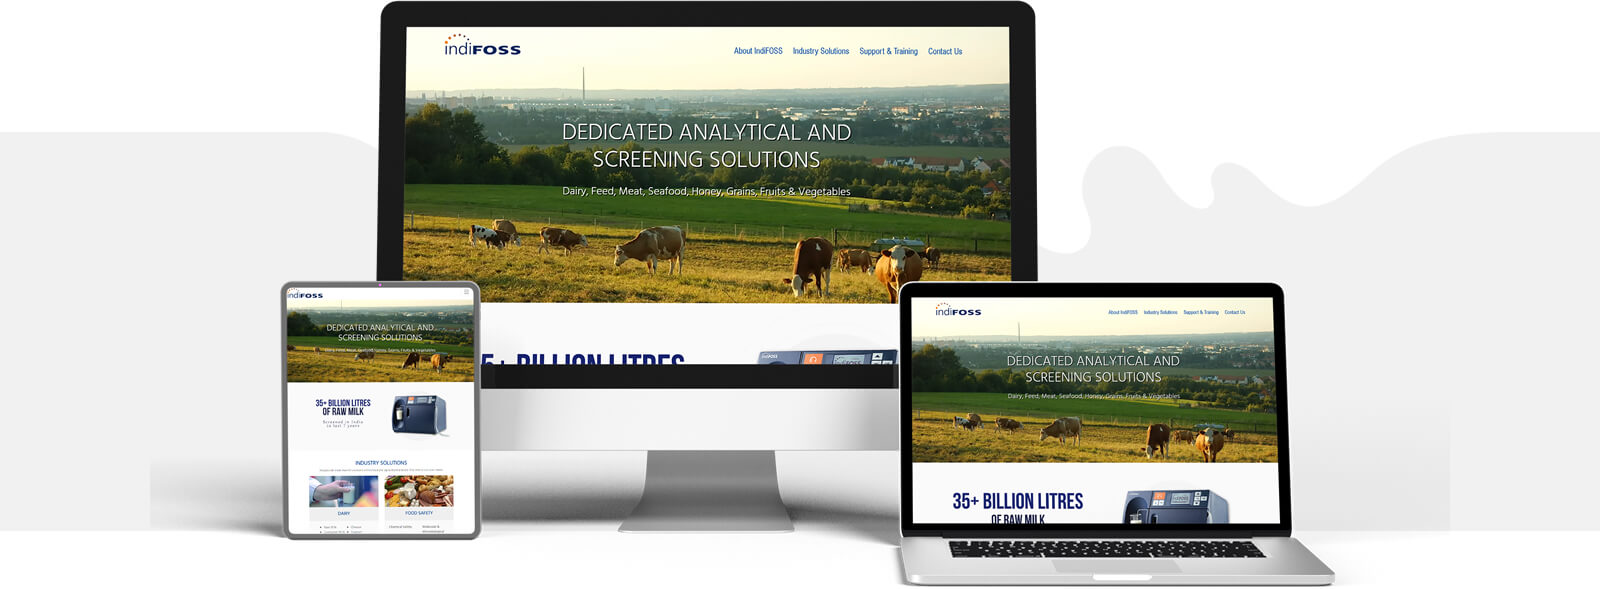 Website Design For Dairy Industry